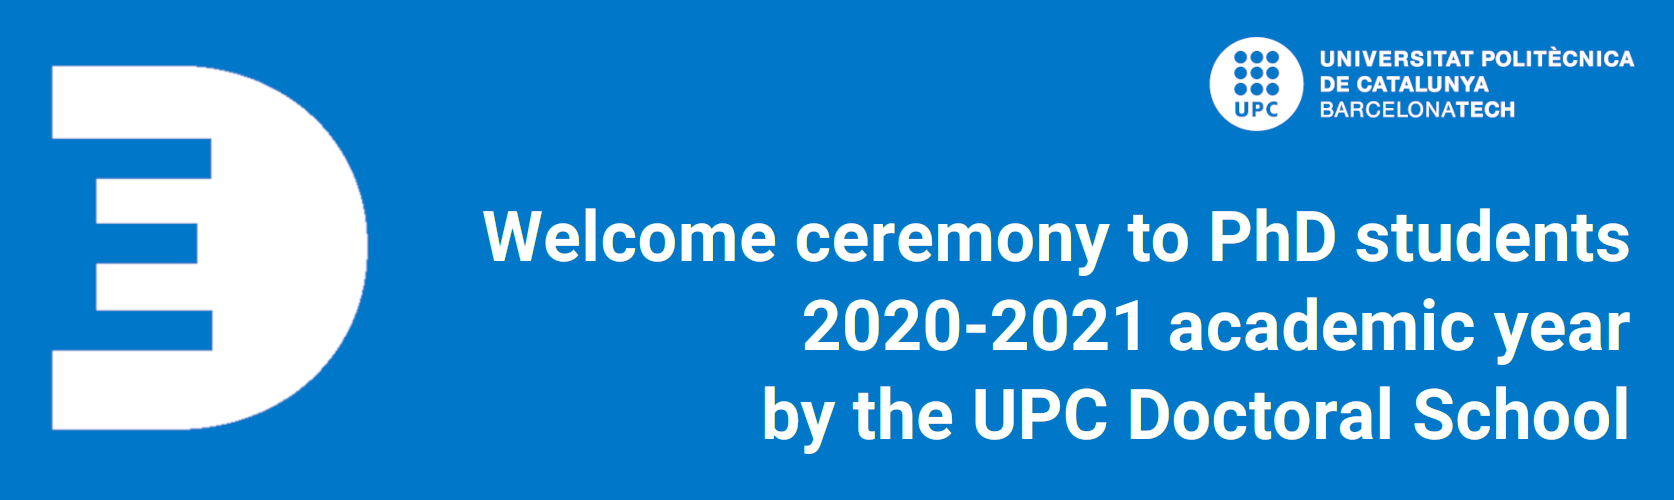 welcome_ceremony